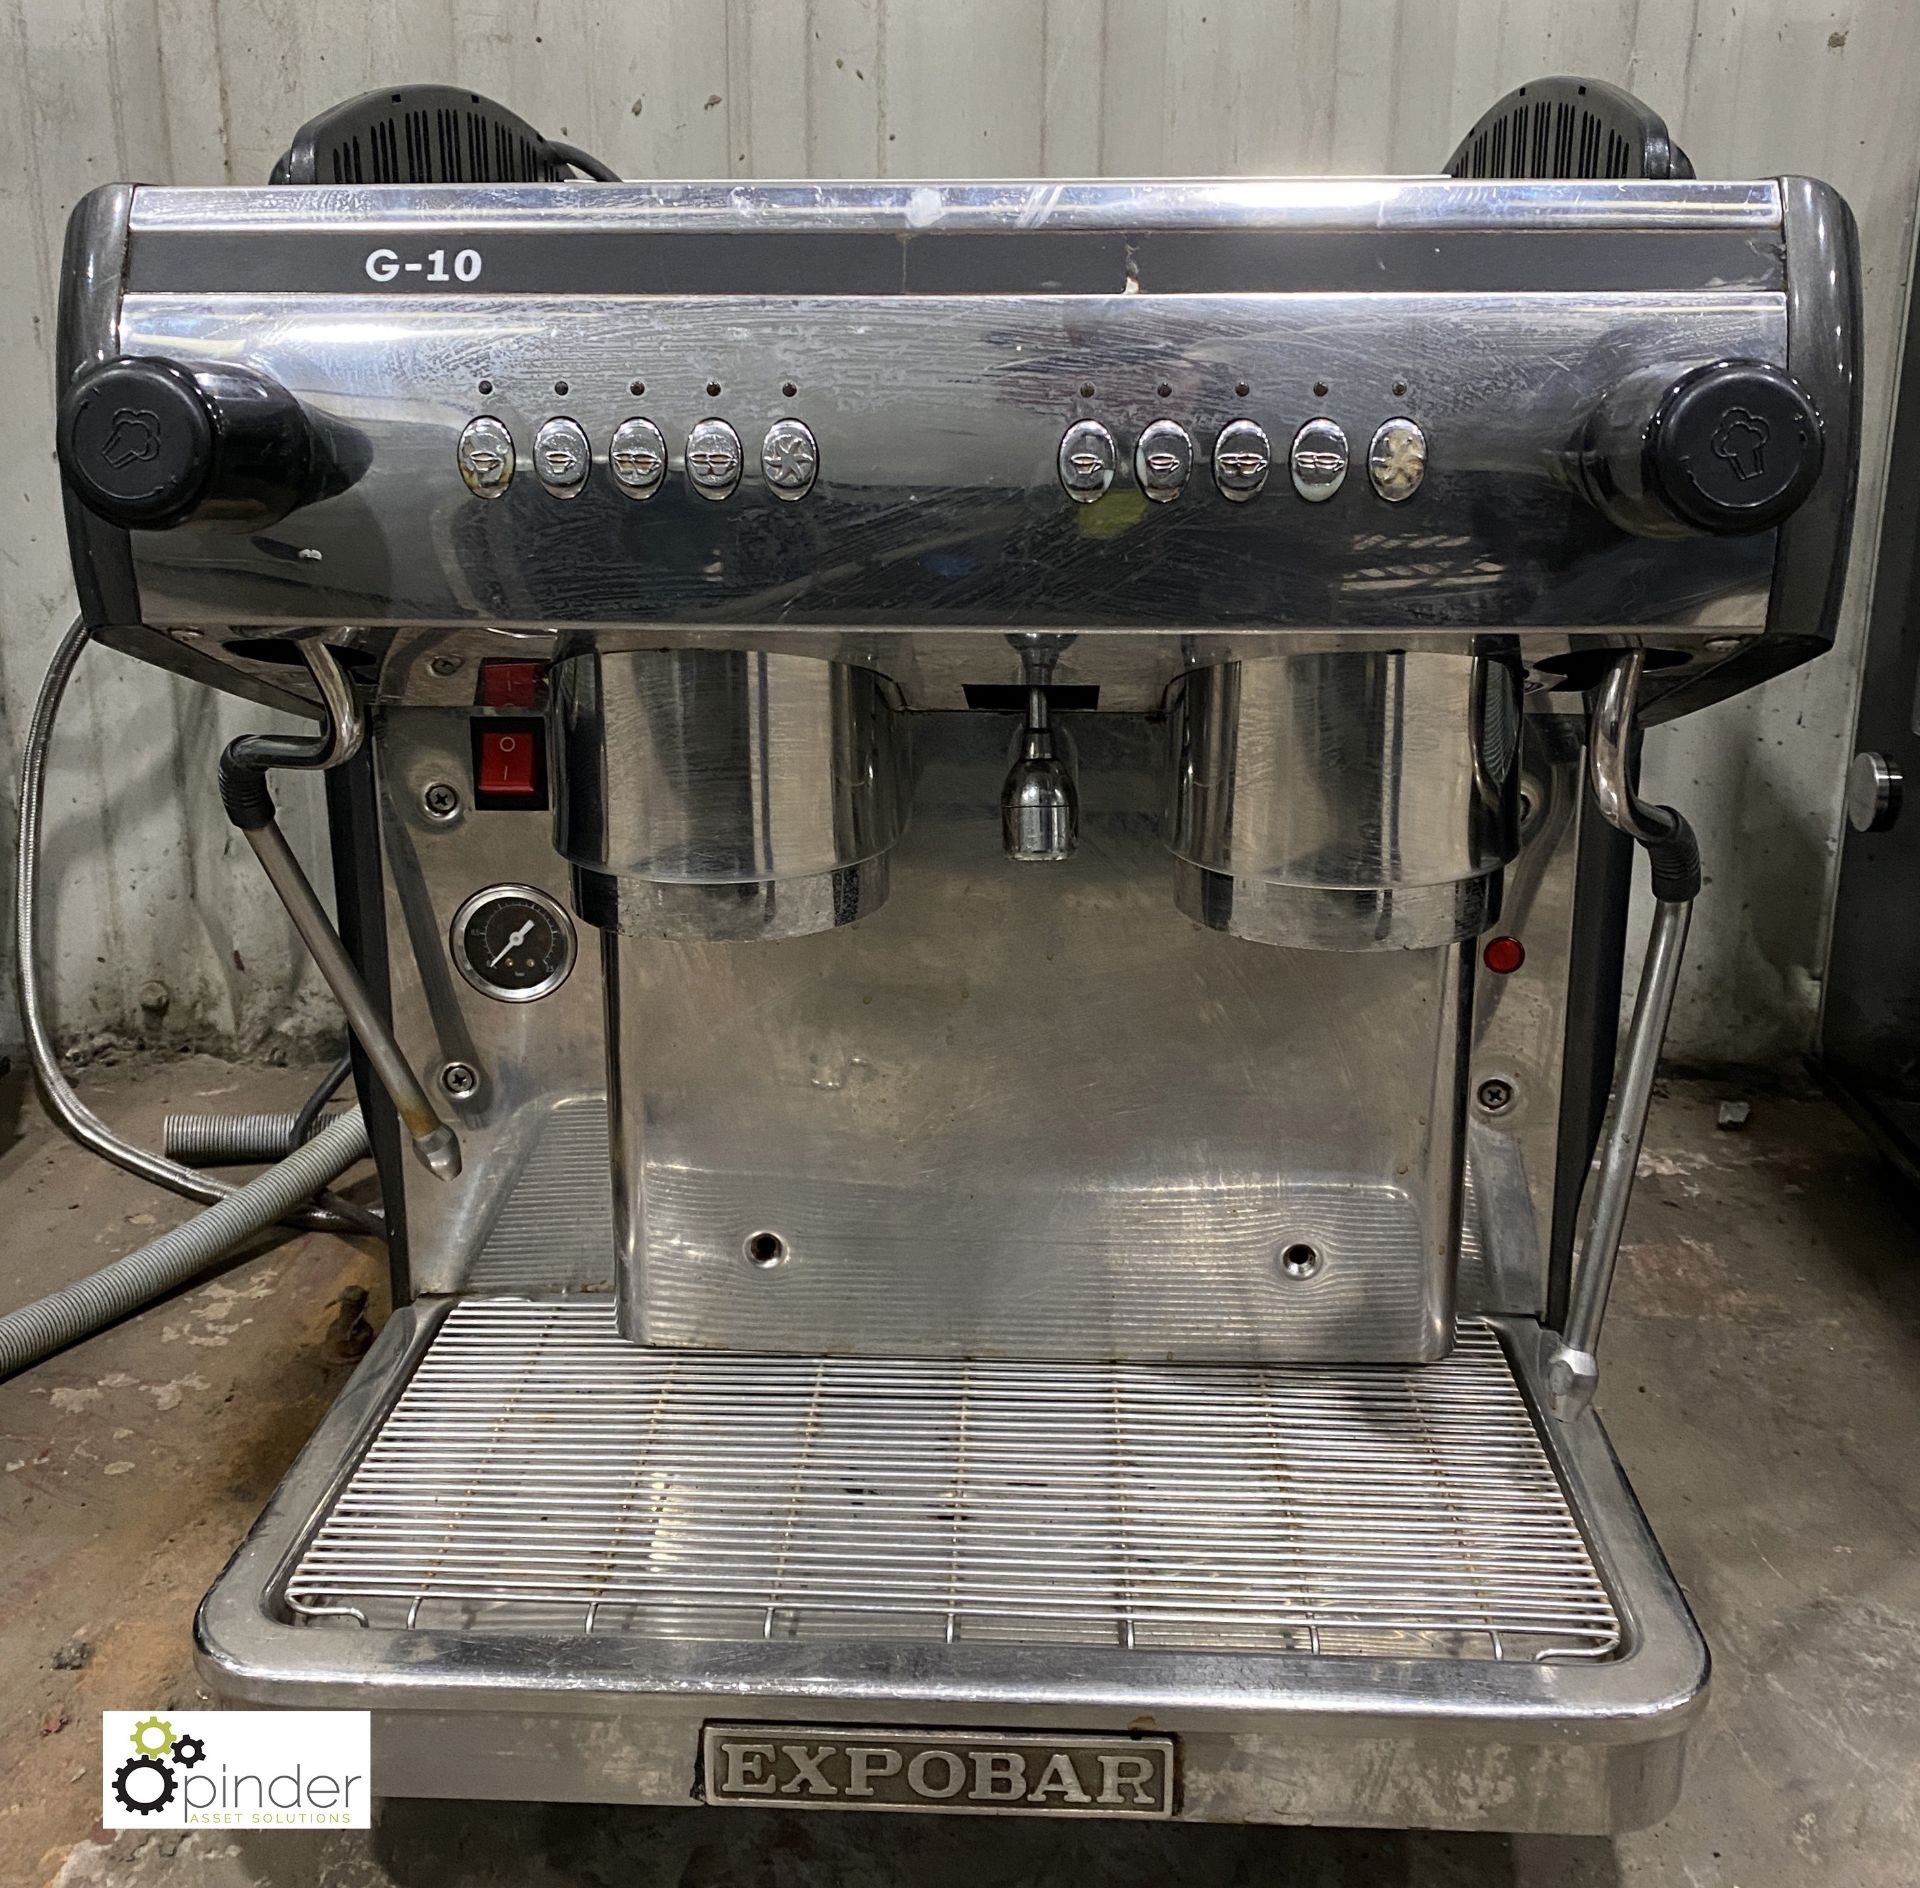 Rijo Expobar G10 Processional 2-cup Espresso Machine, 240volts (LOCATION: Hammerton Street,